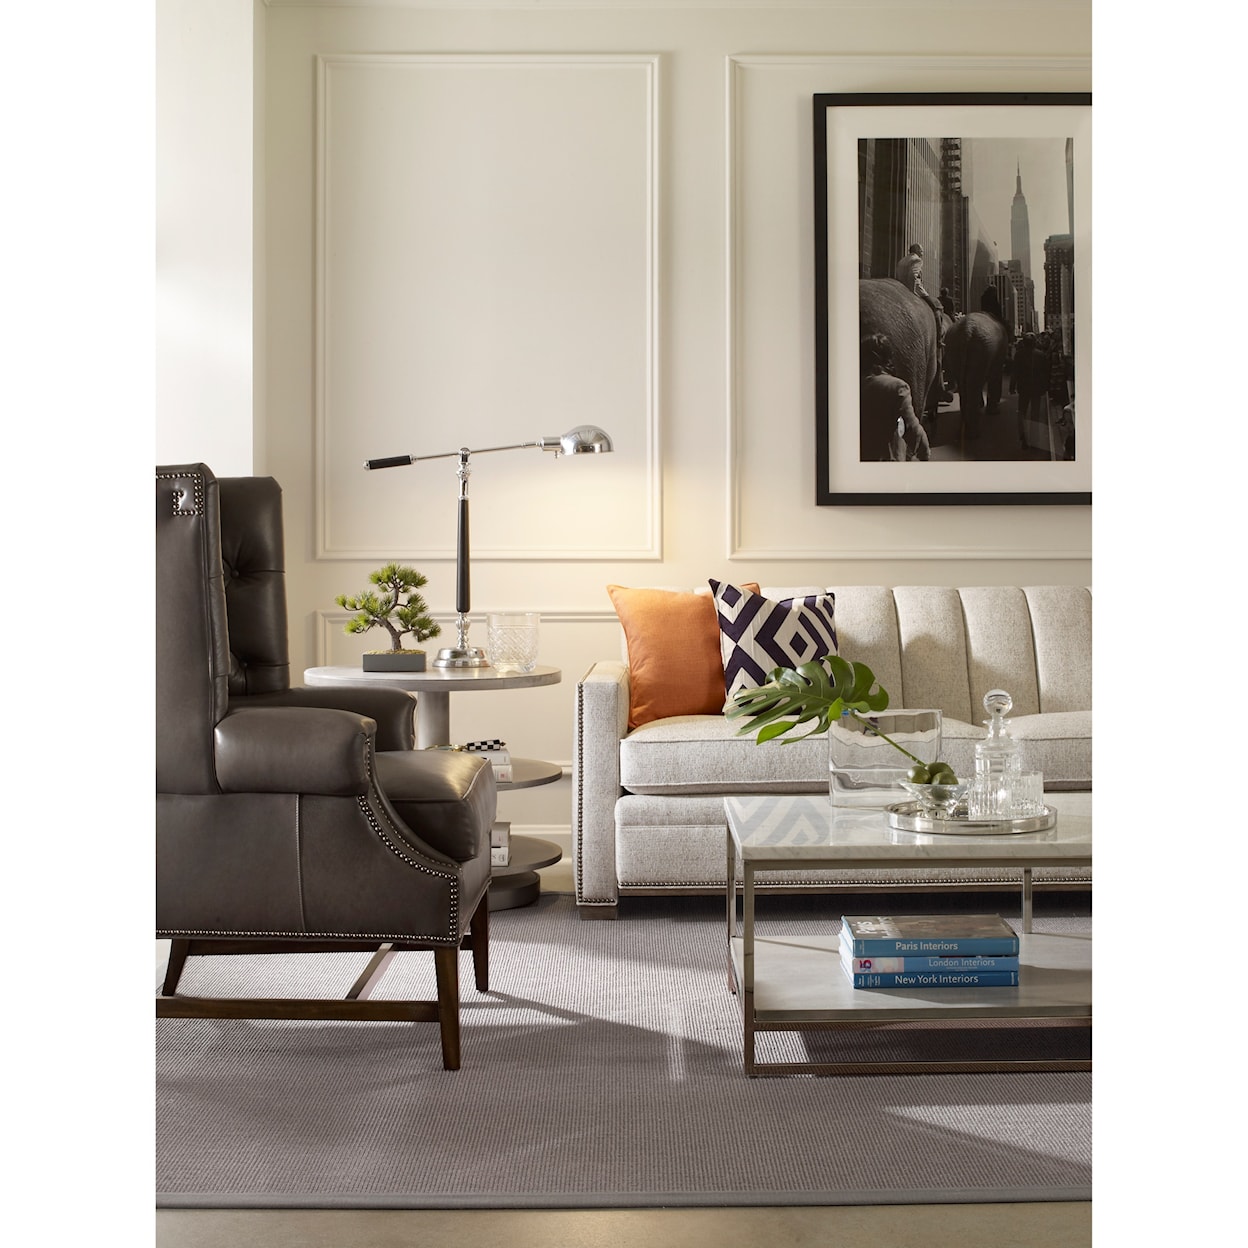 Vanguard Furniture Michael Weiss Garvey Sofa